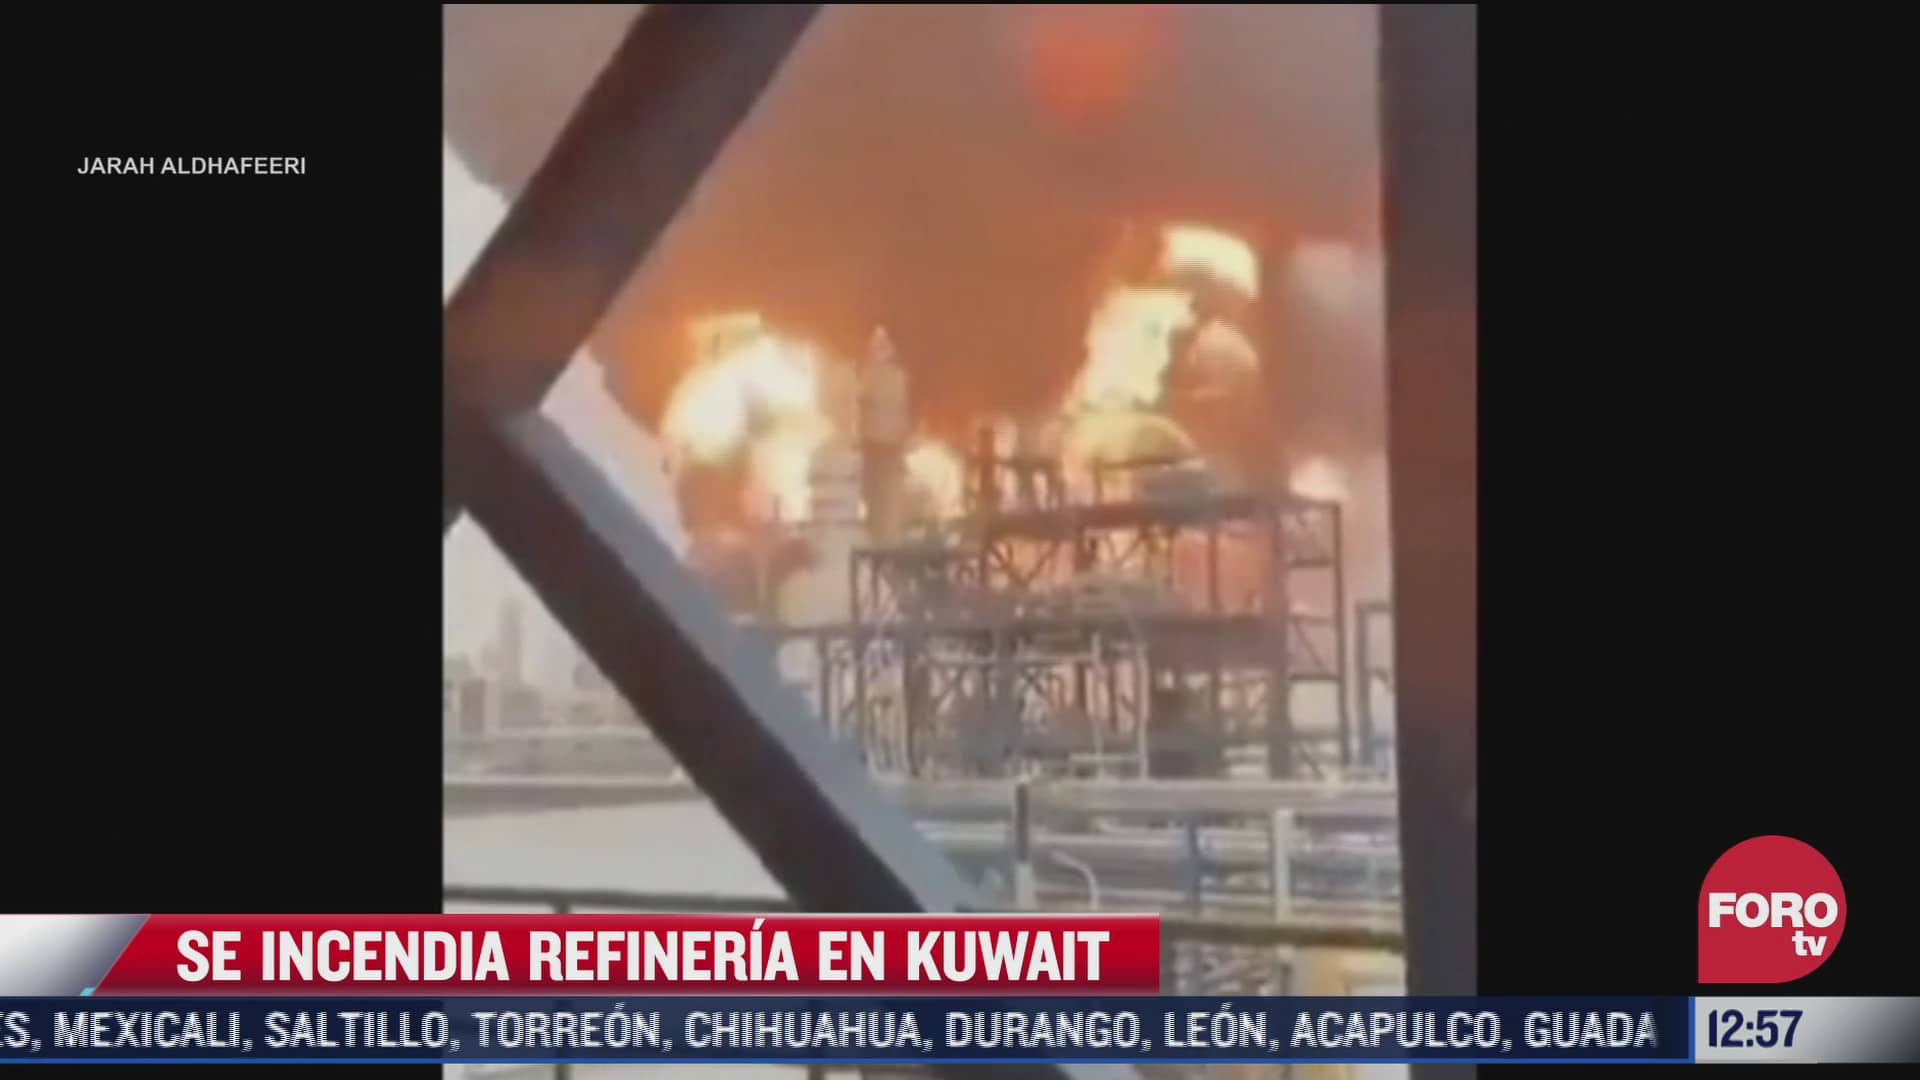 se registra incendio en refineria de kuwait